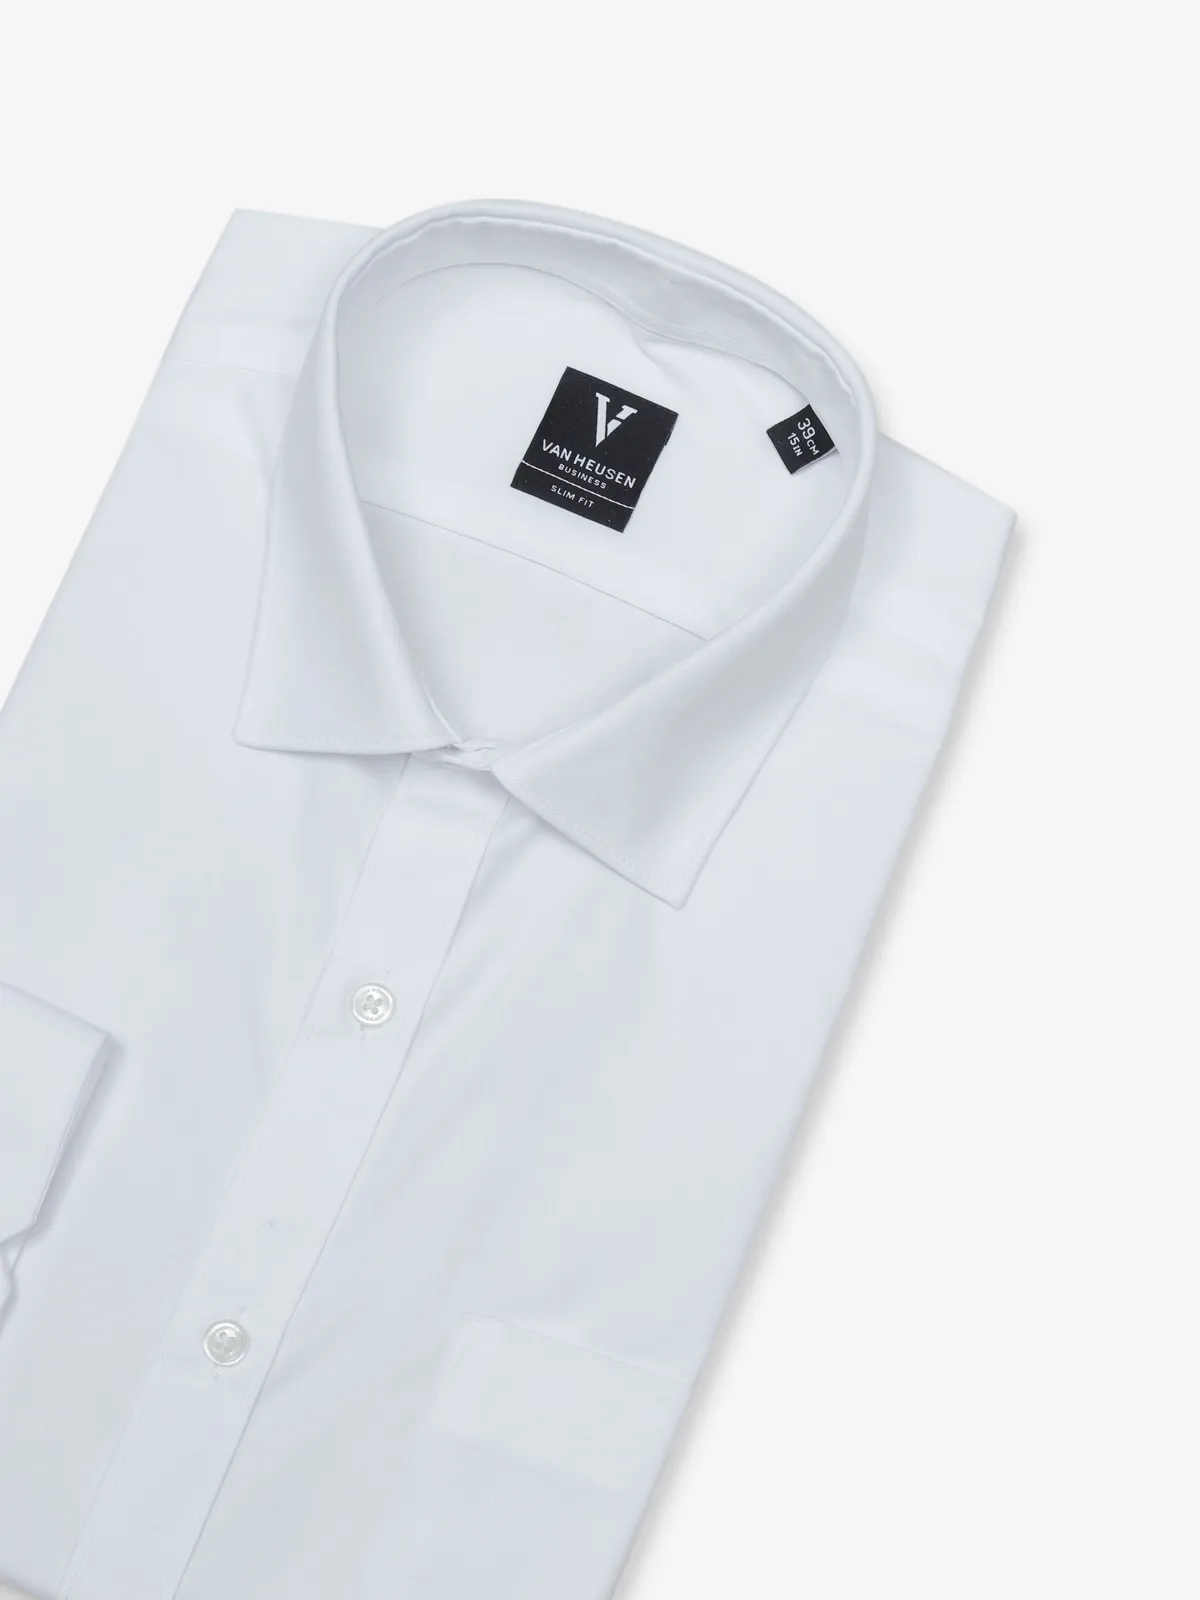 Van Heusen white plain slim fit shirt